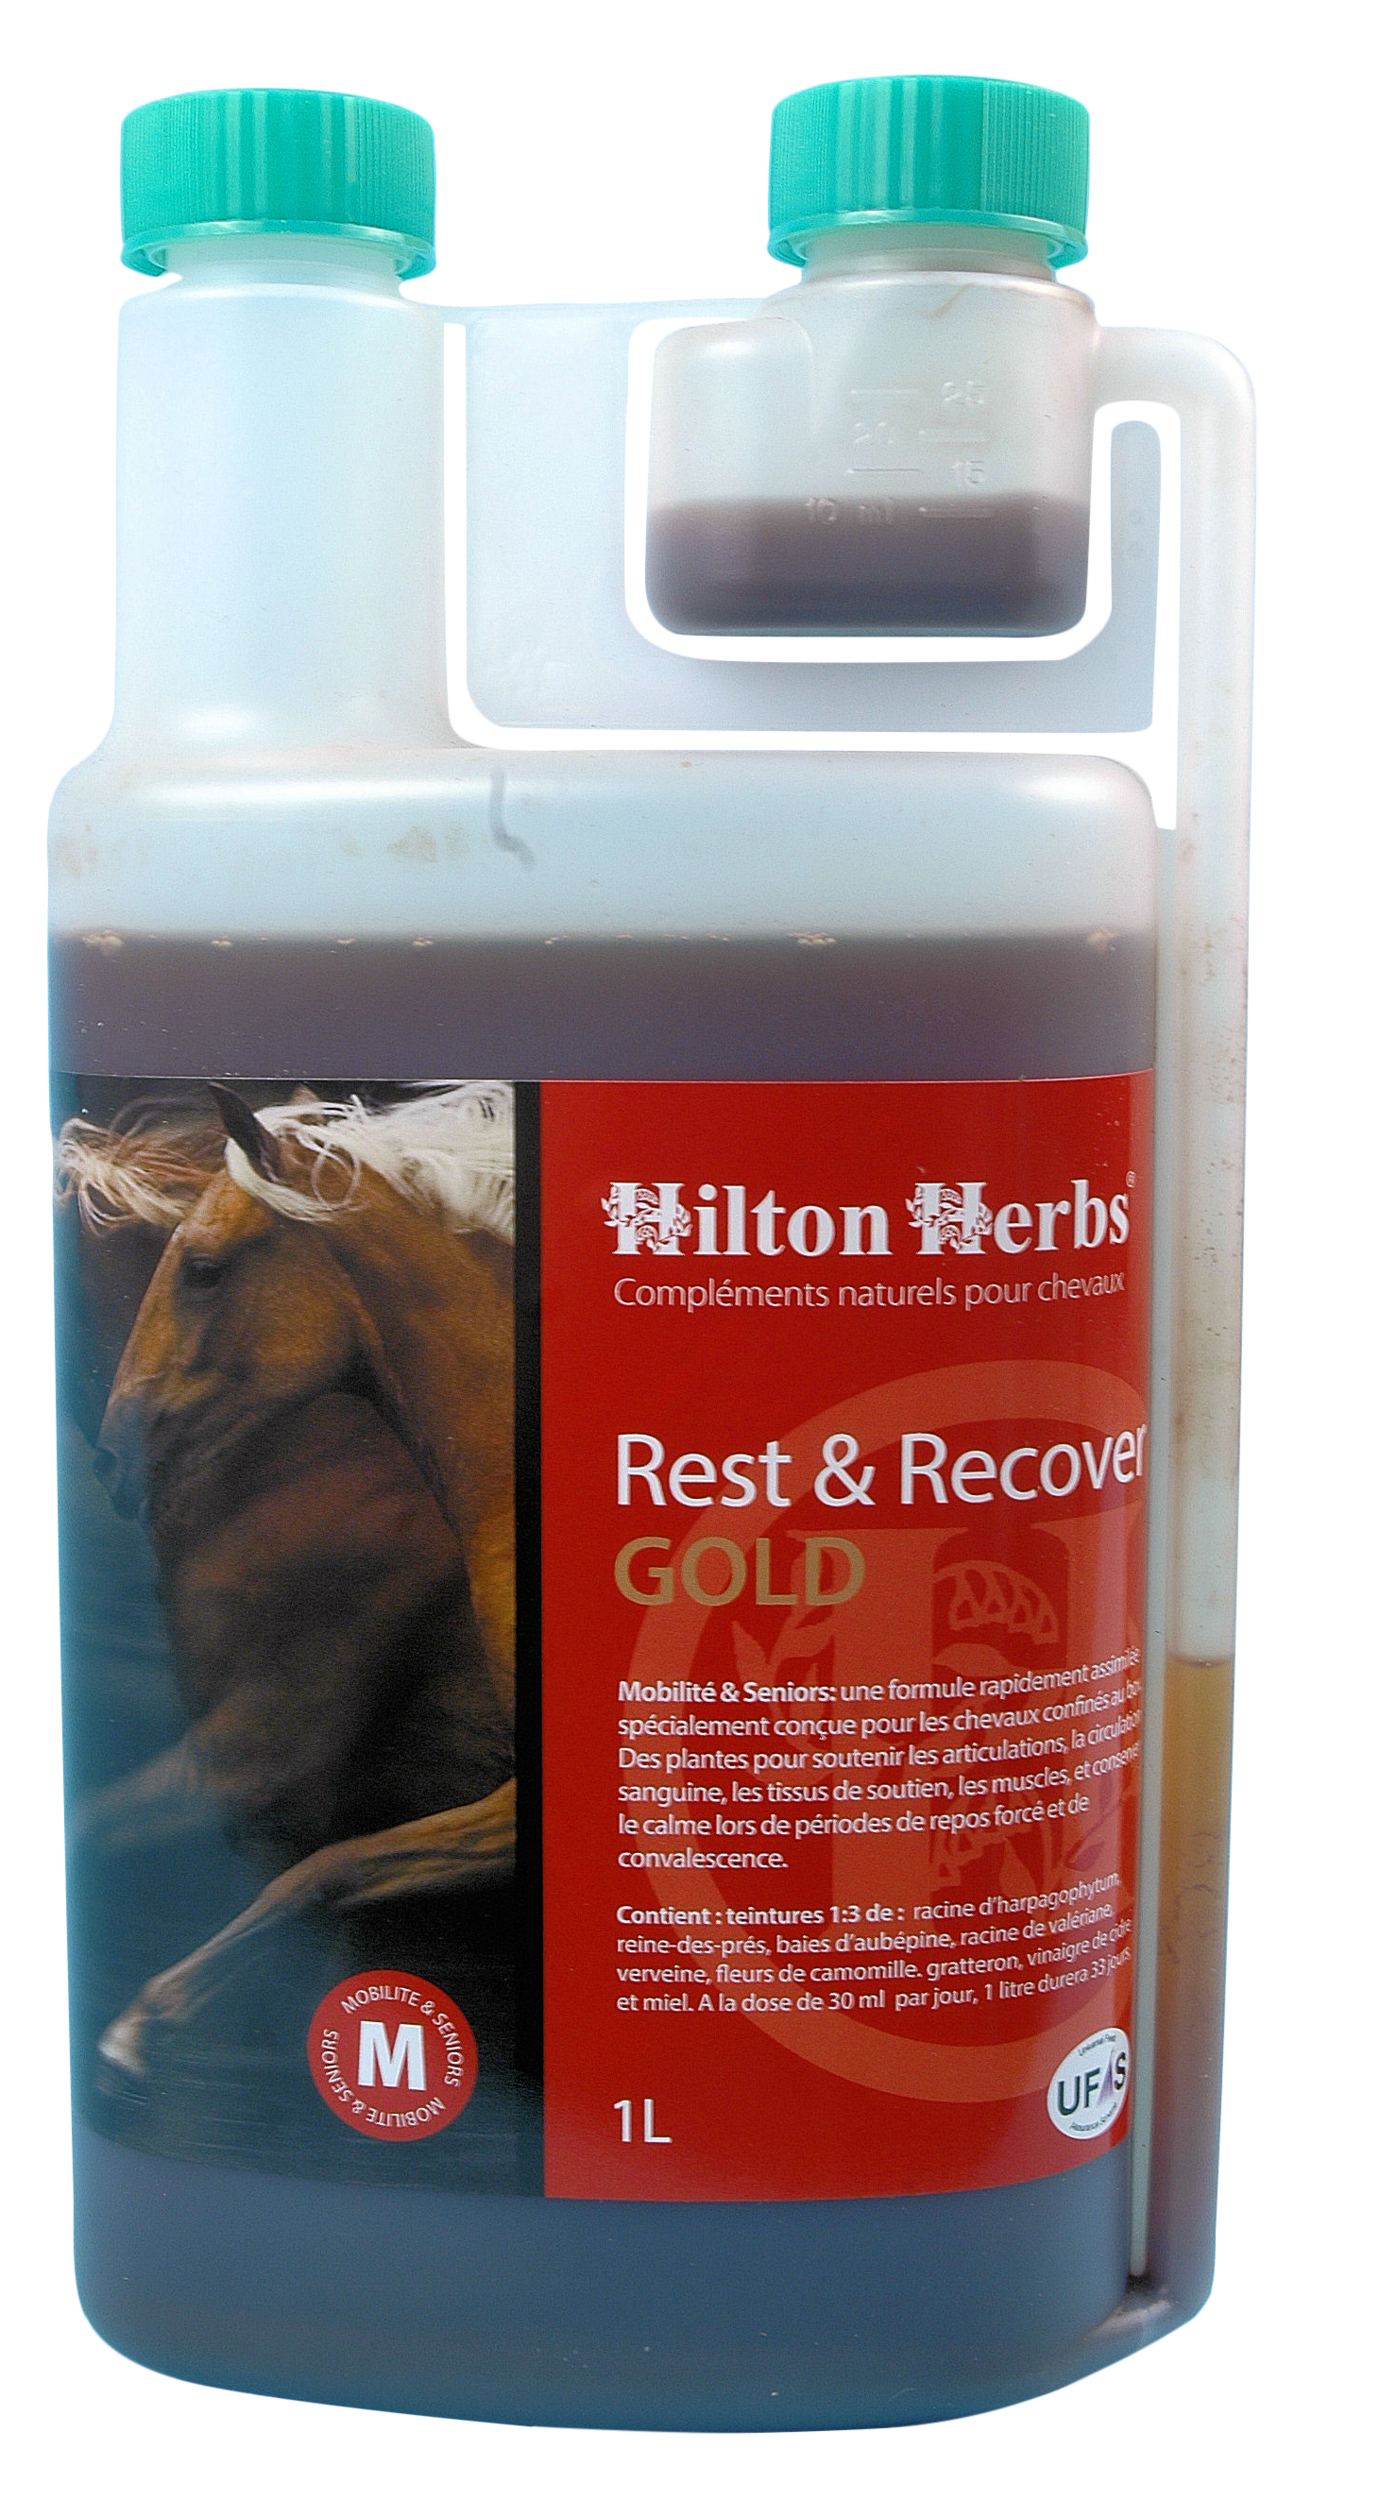 REST & RECOVER 1L hilton herbs convalescence